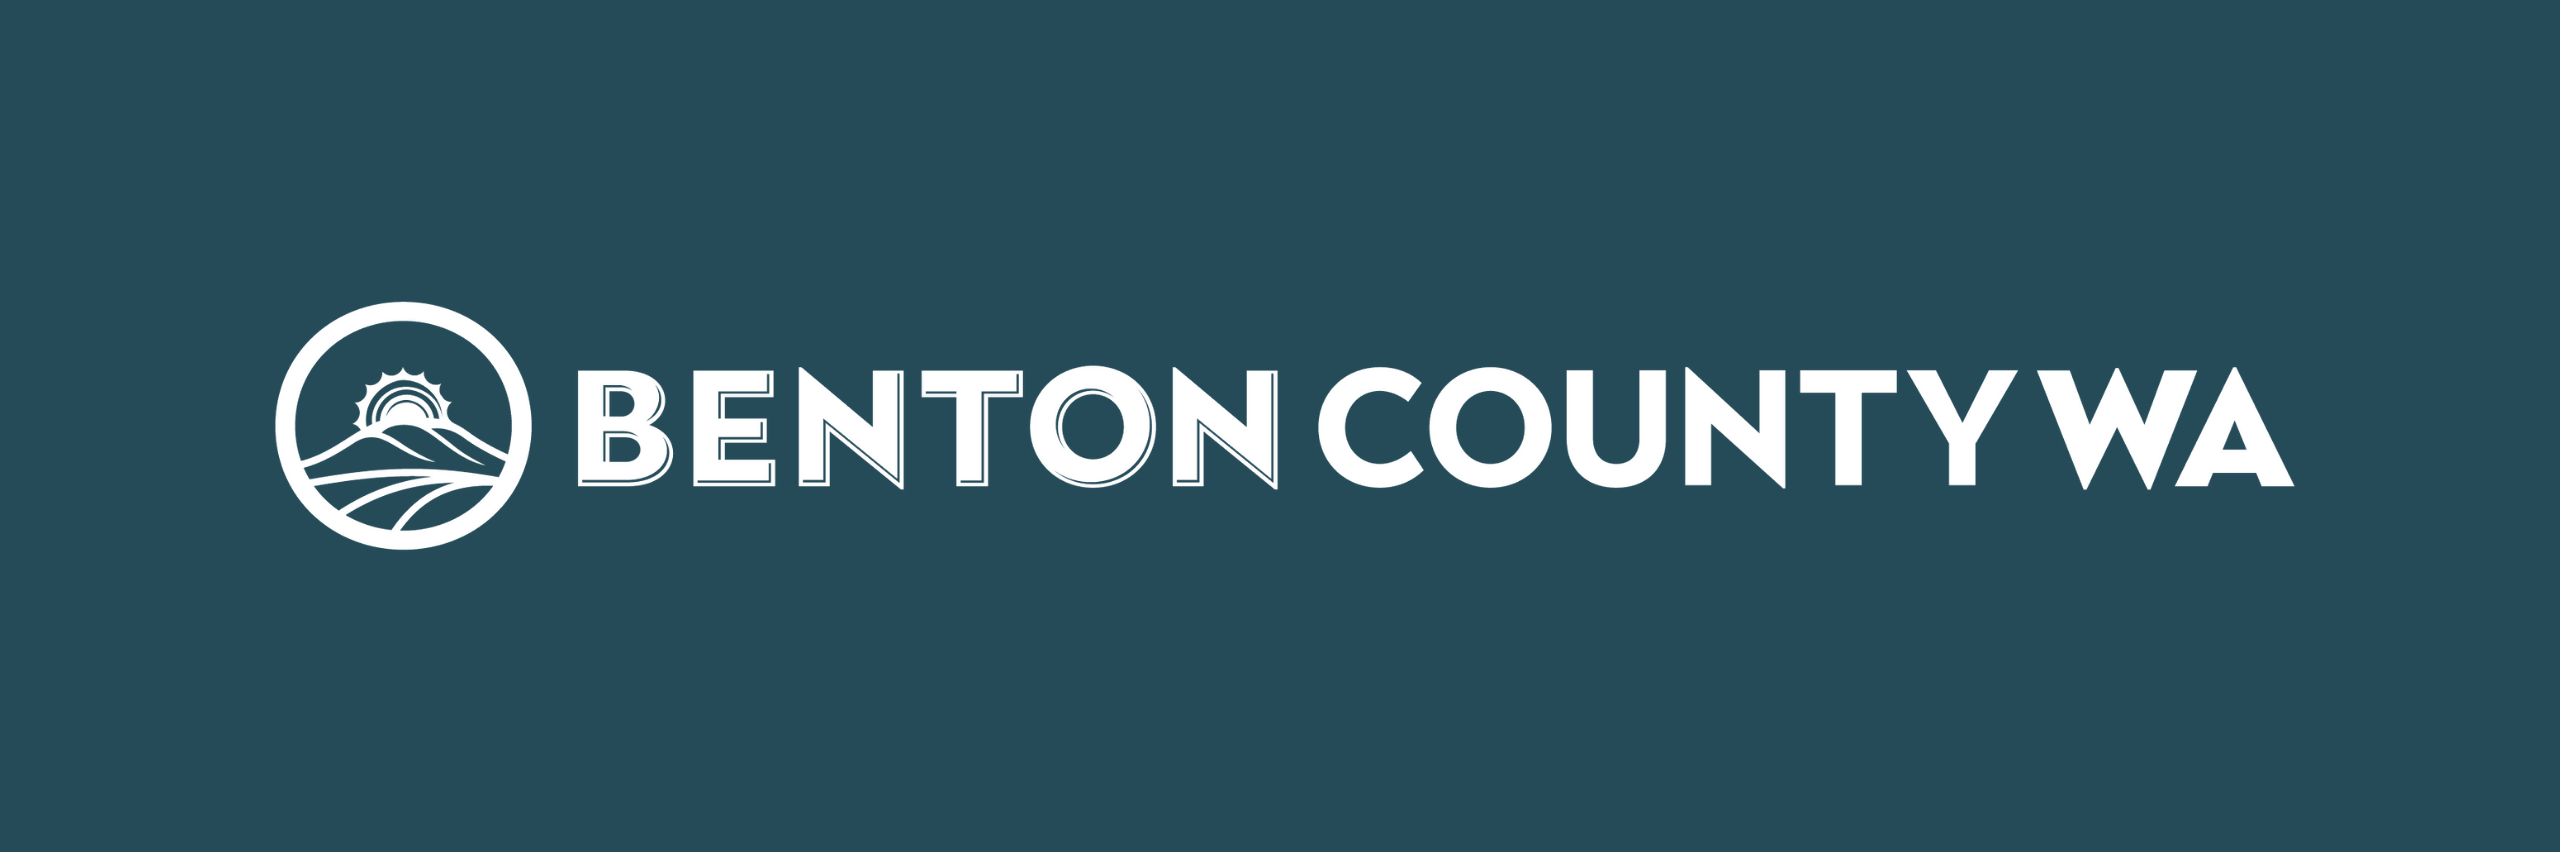 Benton County Finance Committee